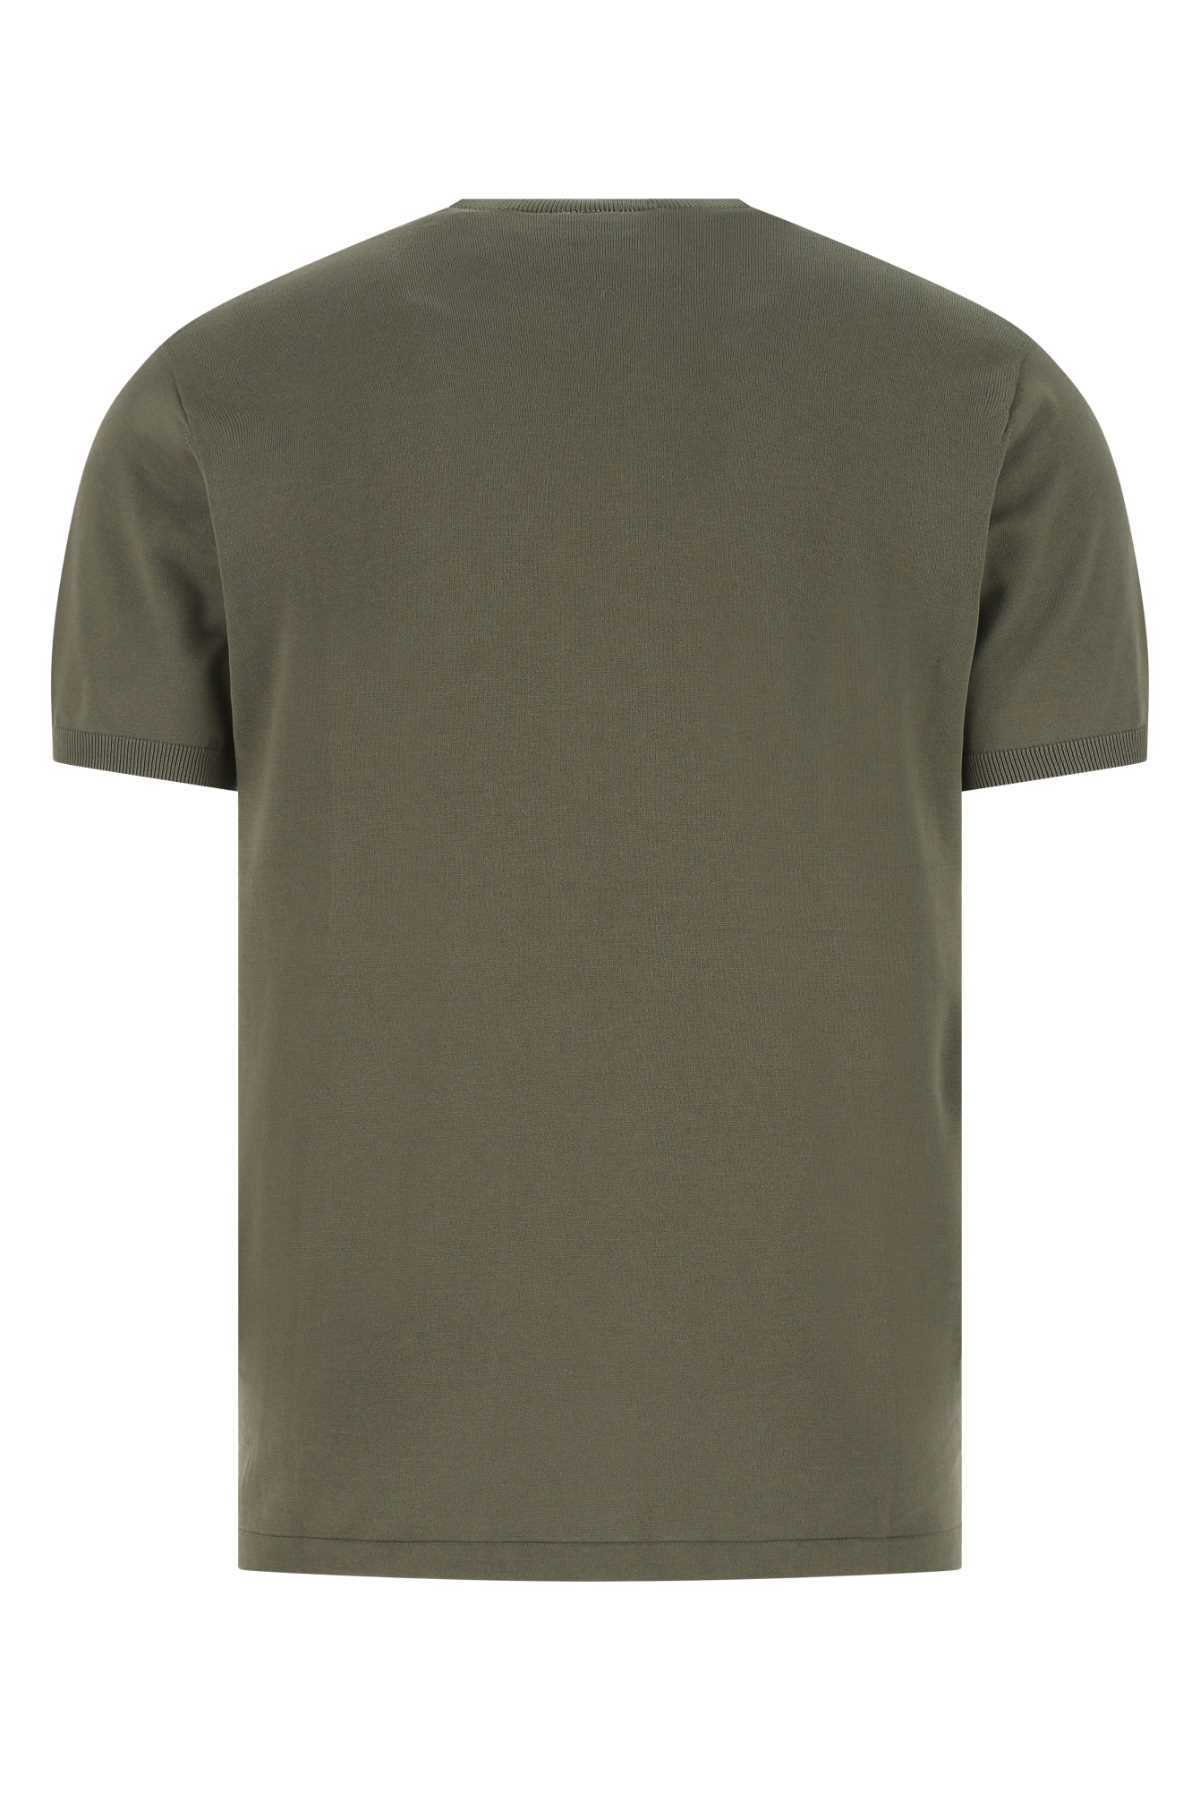 Aspesi Olive Green Cotton T-shirt In 01380